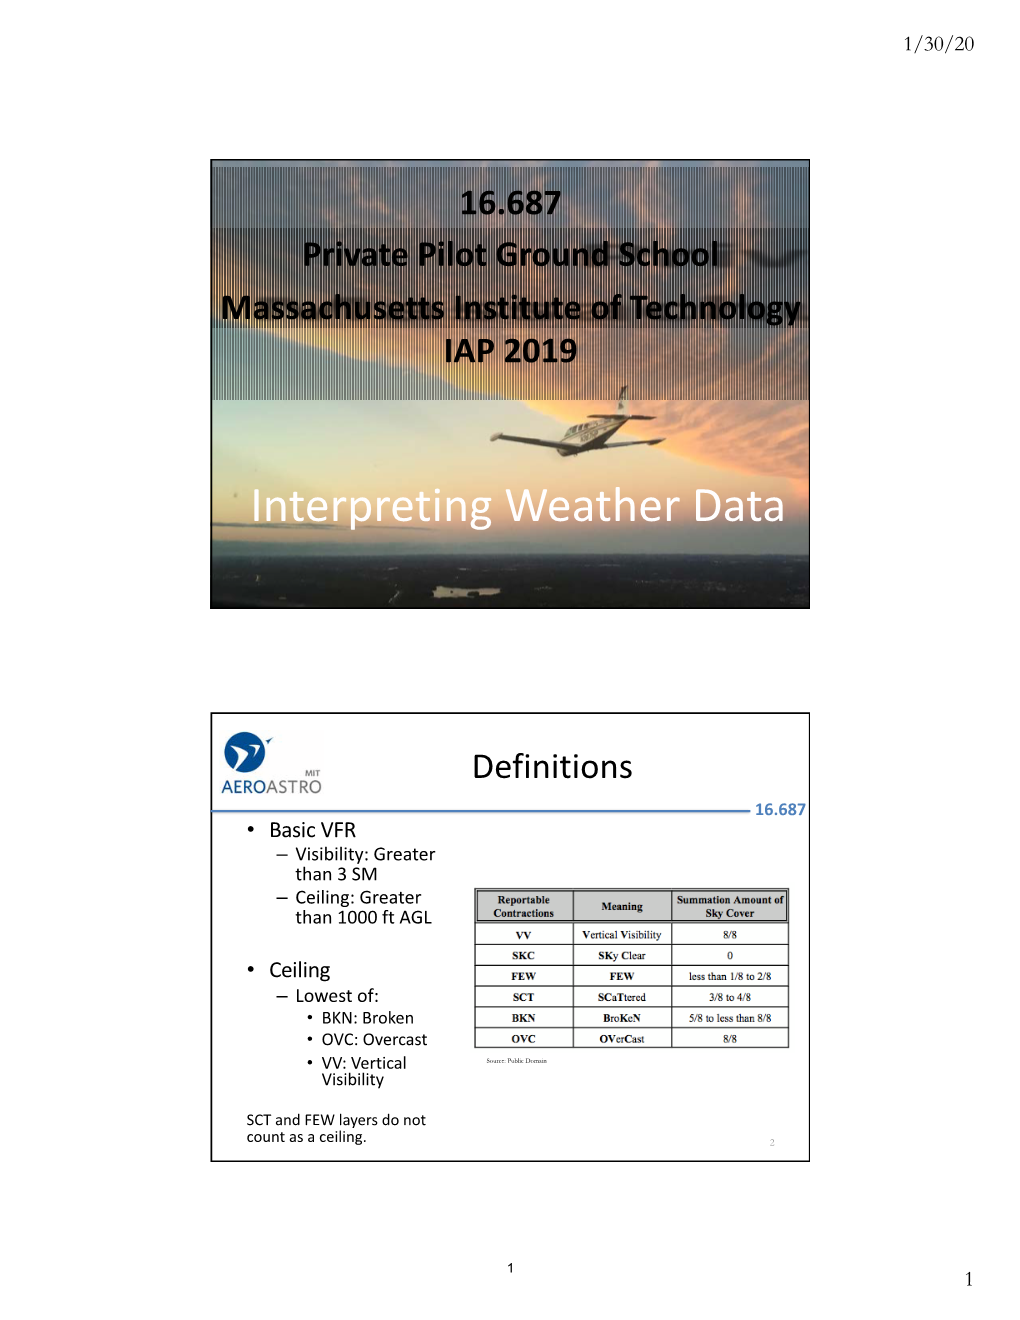 Interpreting Weather Data